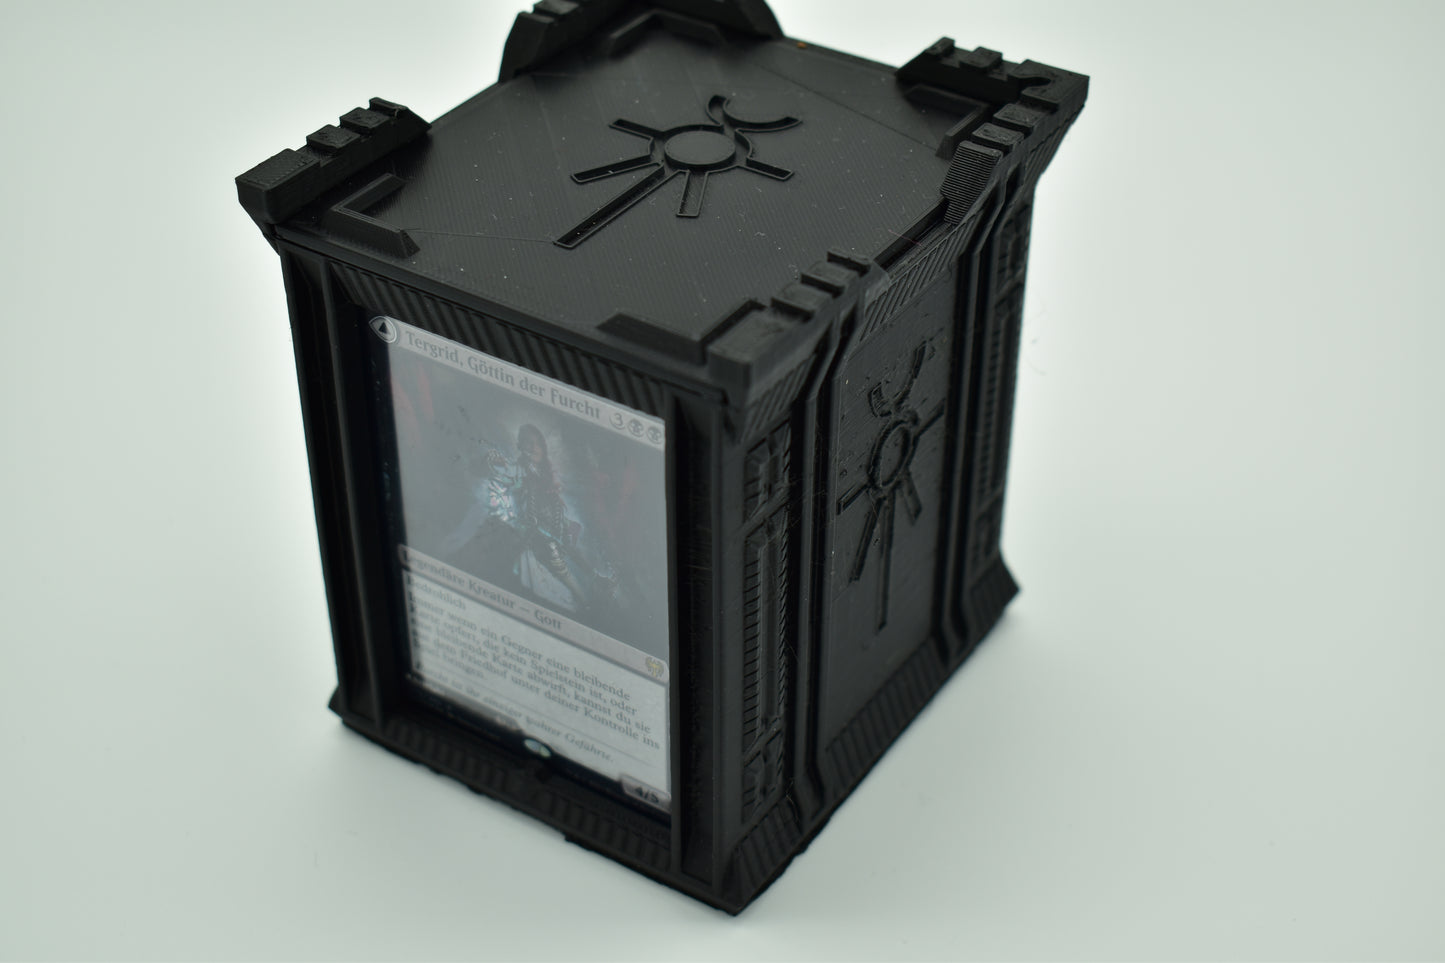 MtG Commander Deckbox / Cardbox